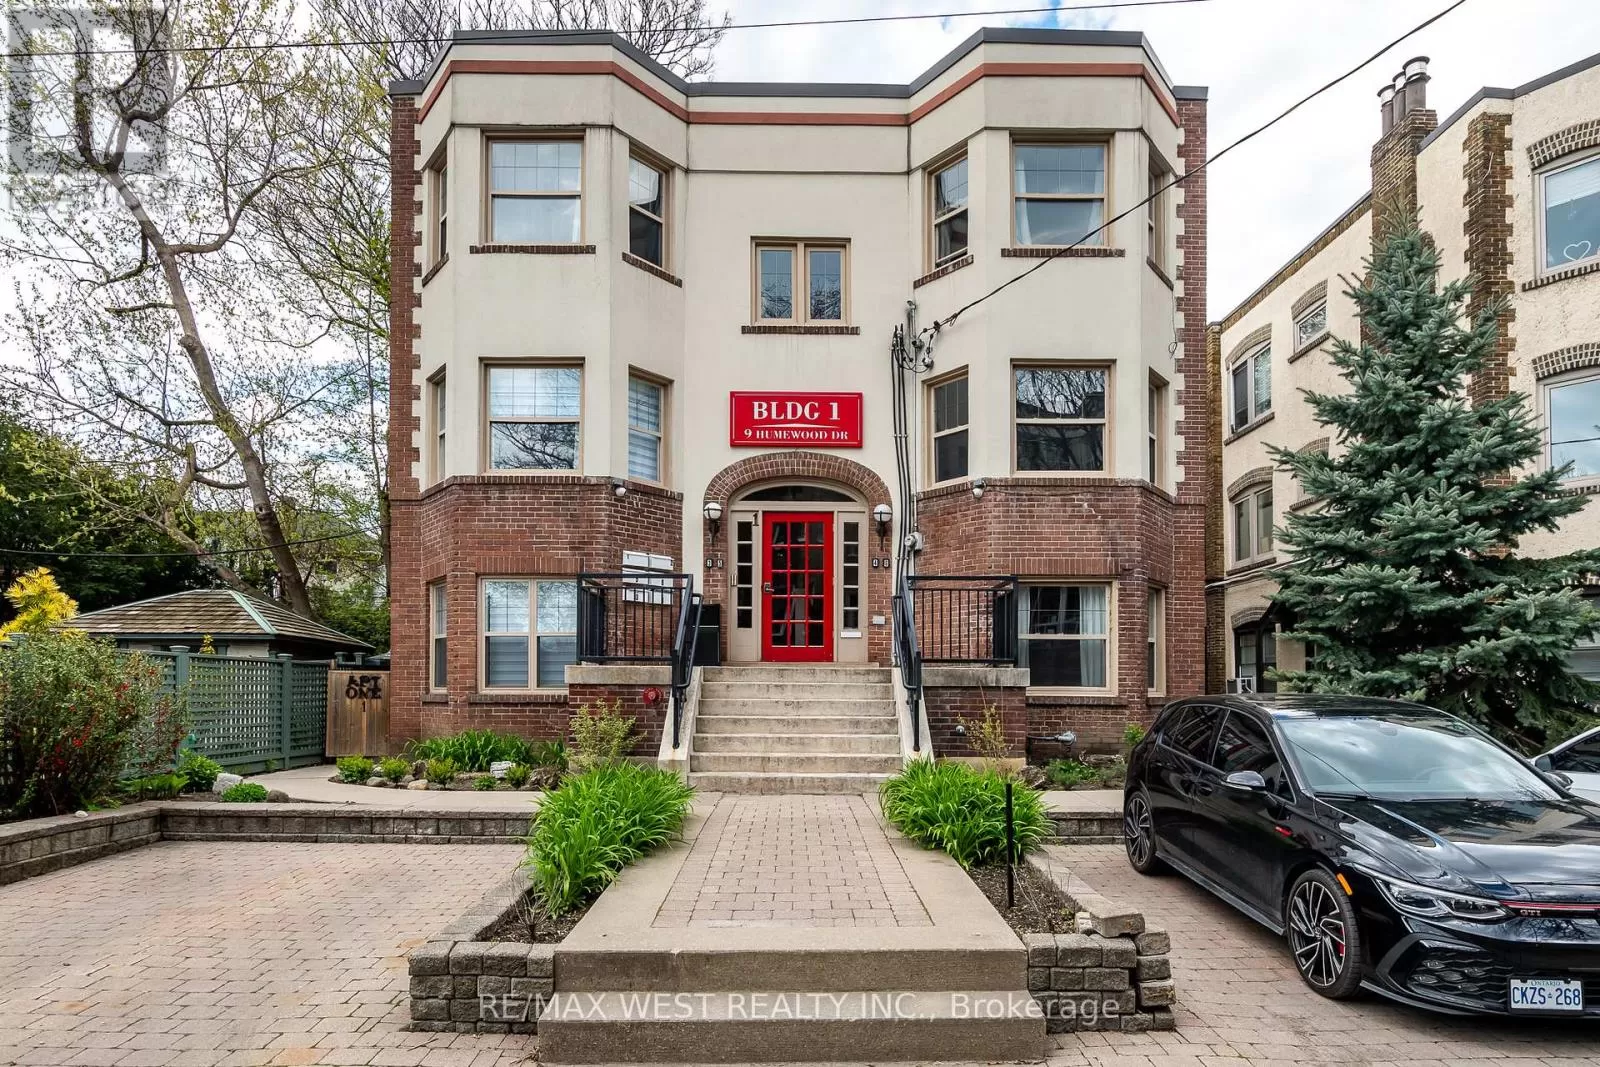 House for rent: Bldg 1 - 9 Humewood Drive, Toronto, Ontario M6C 1C9